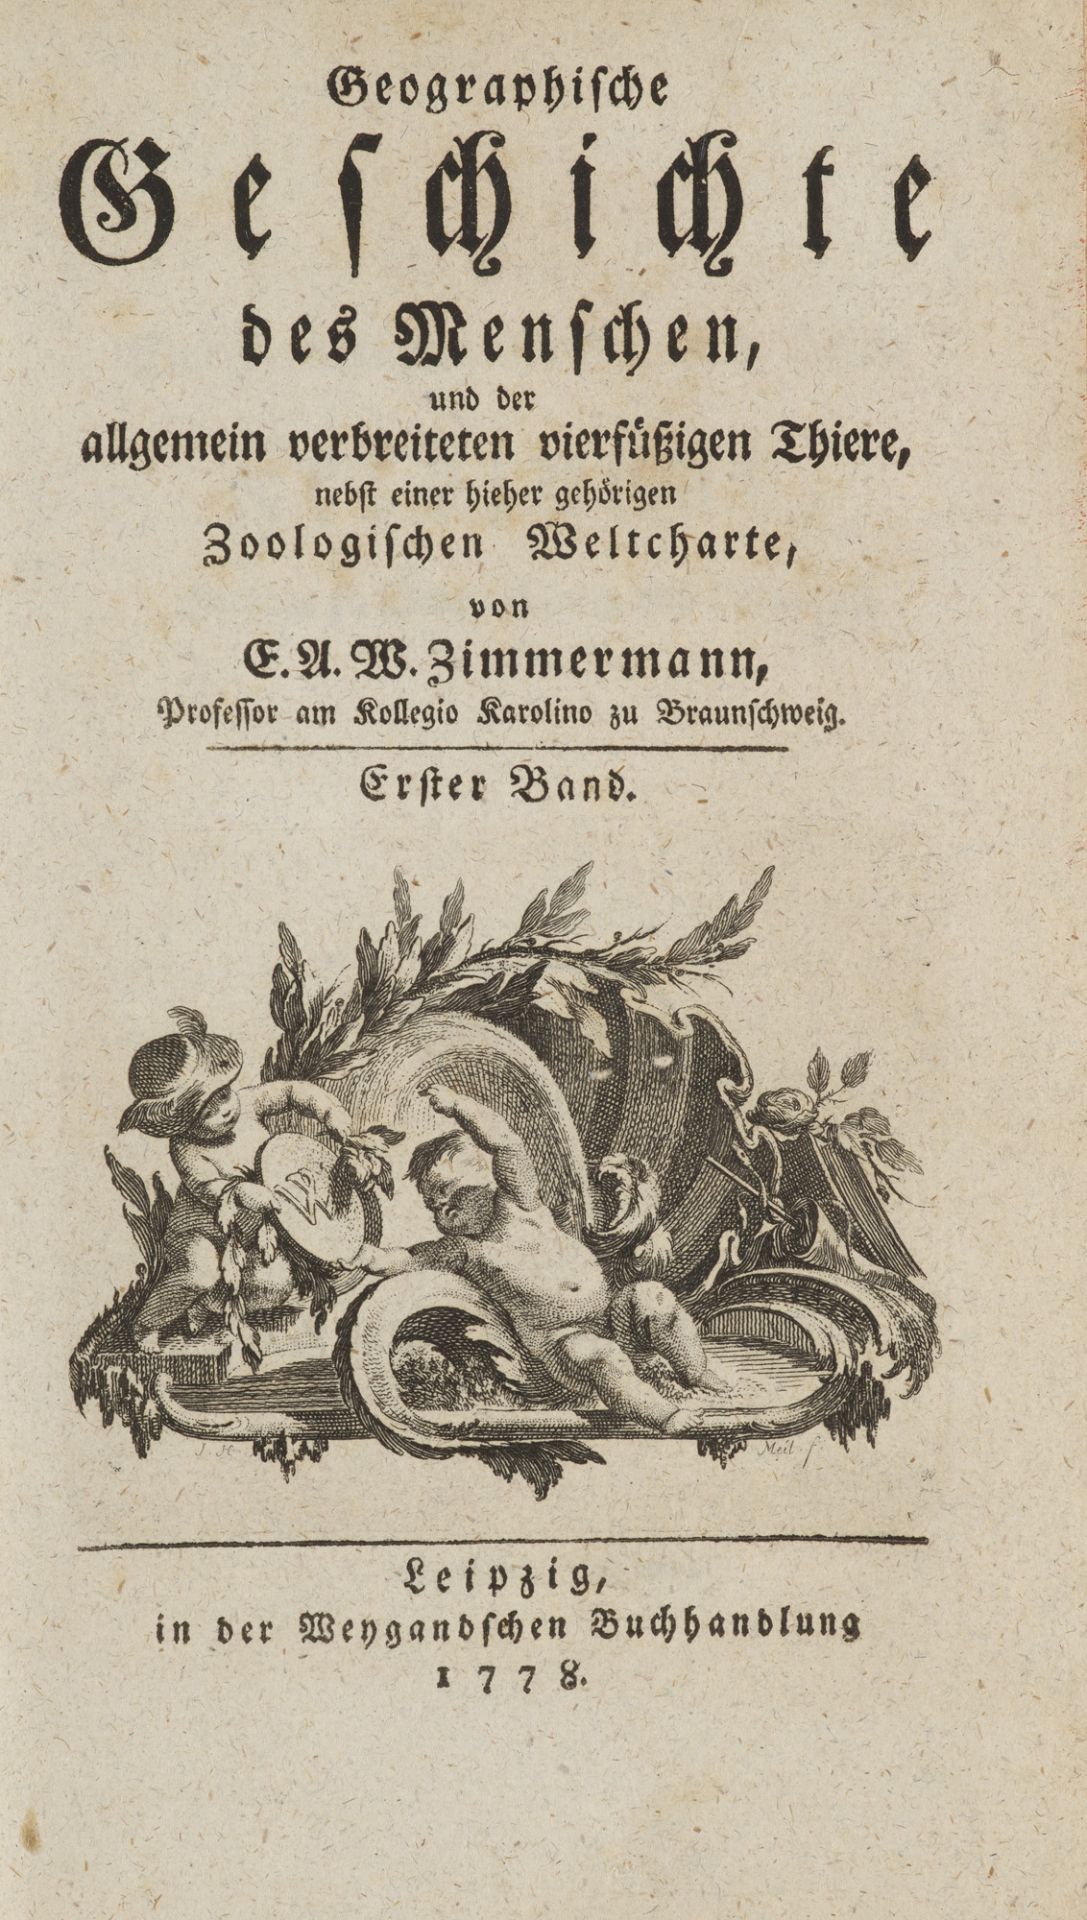 Zoologie - - Eberhard August Wilhelm - Image 2 of 2